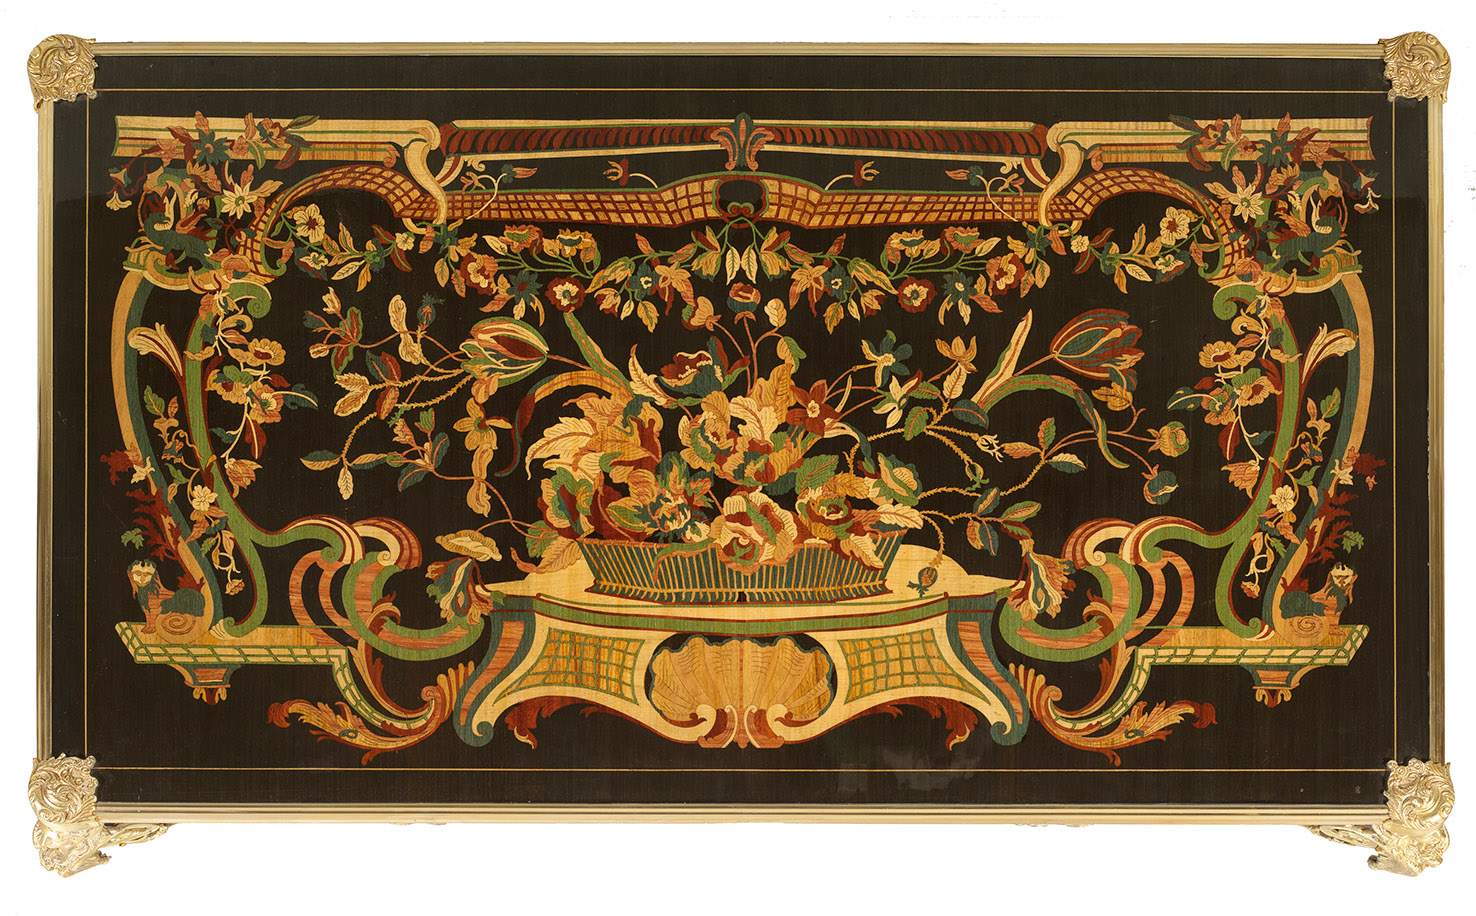 A representative French Louis XV Style bureau plat rich marquetey